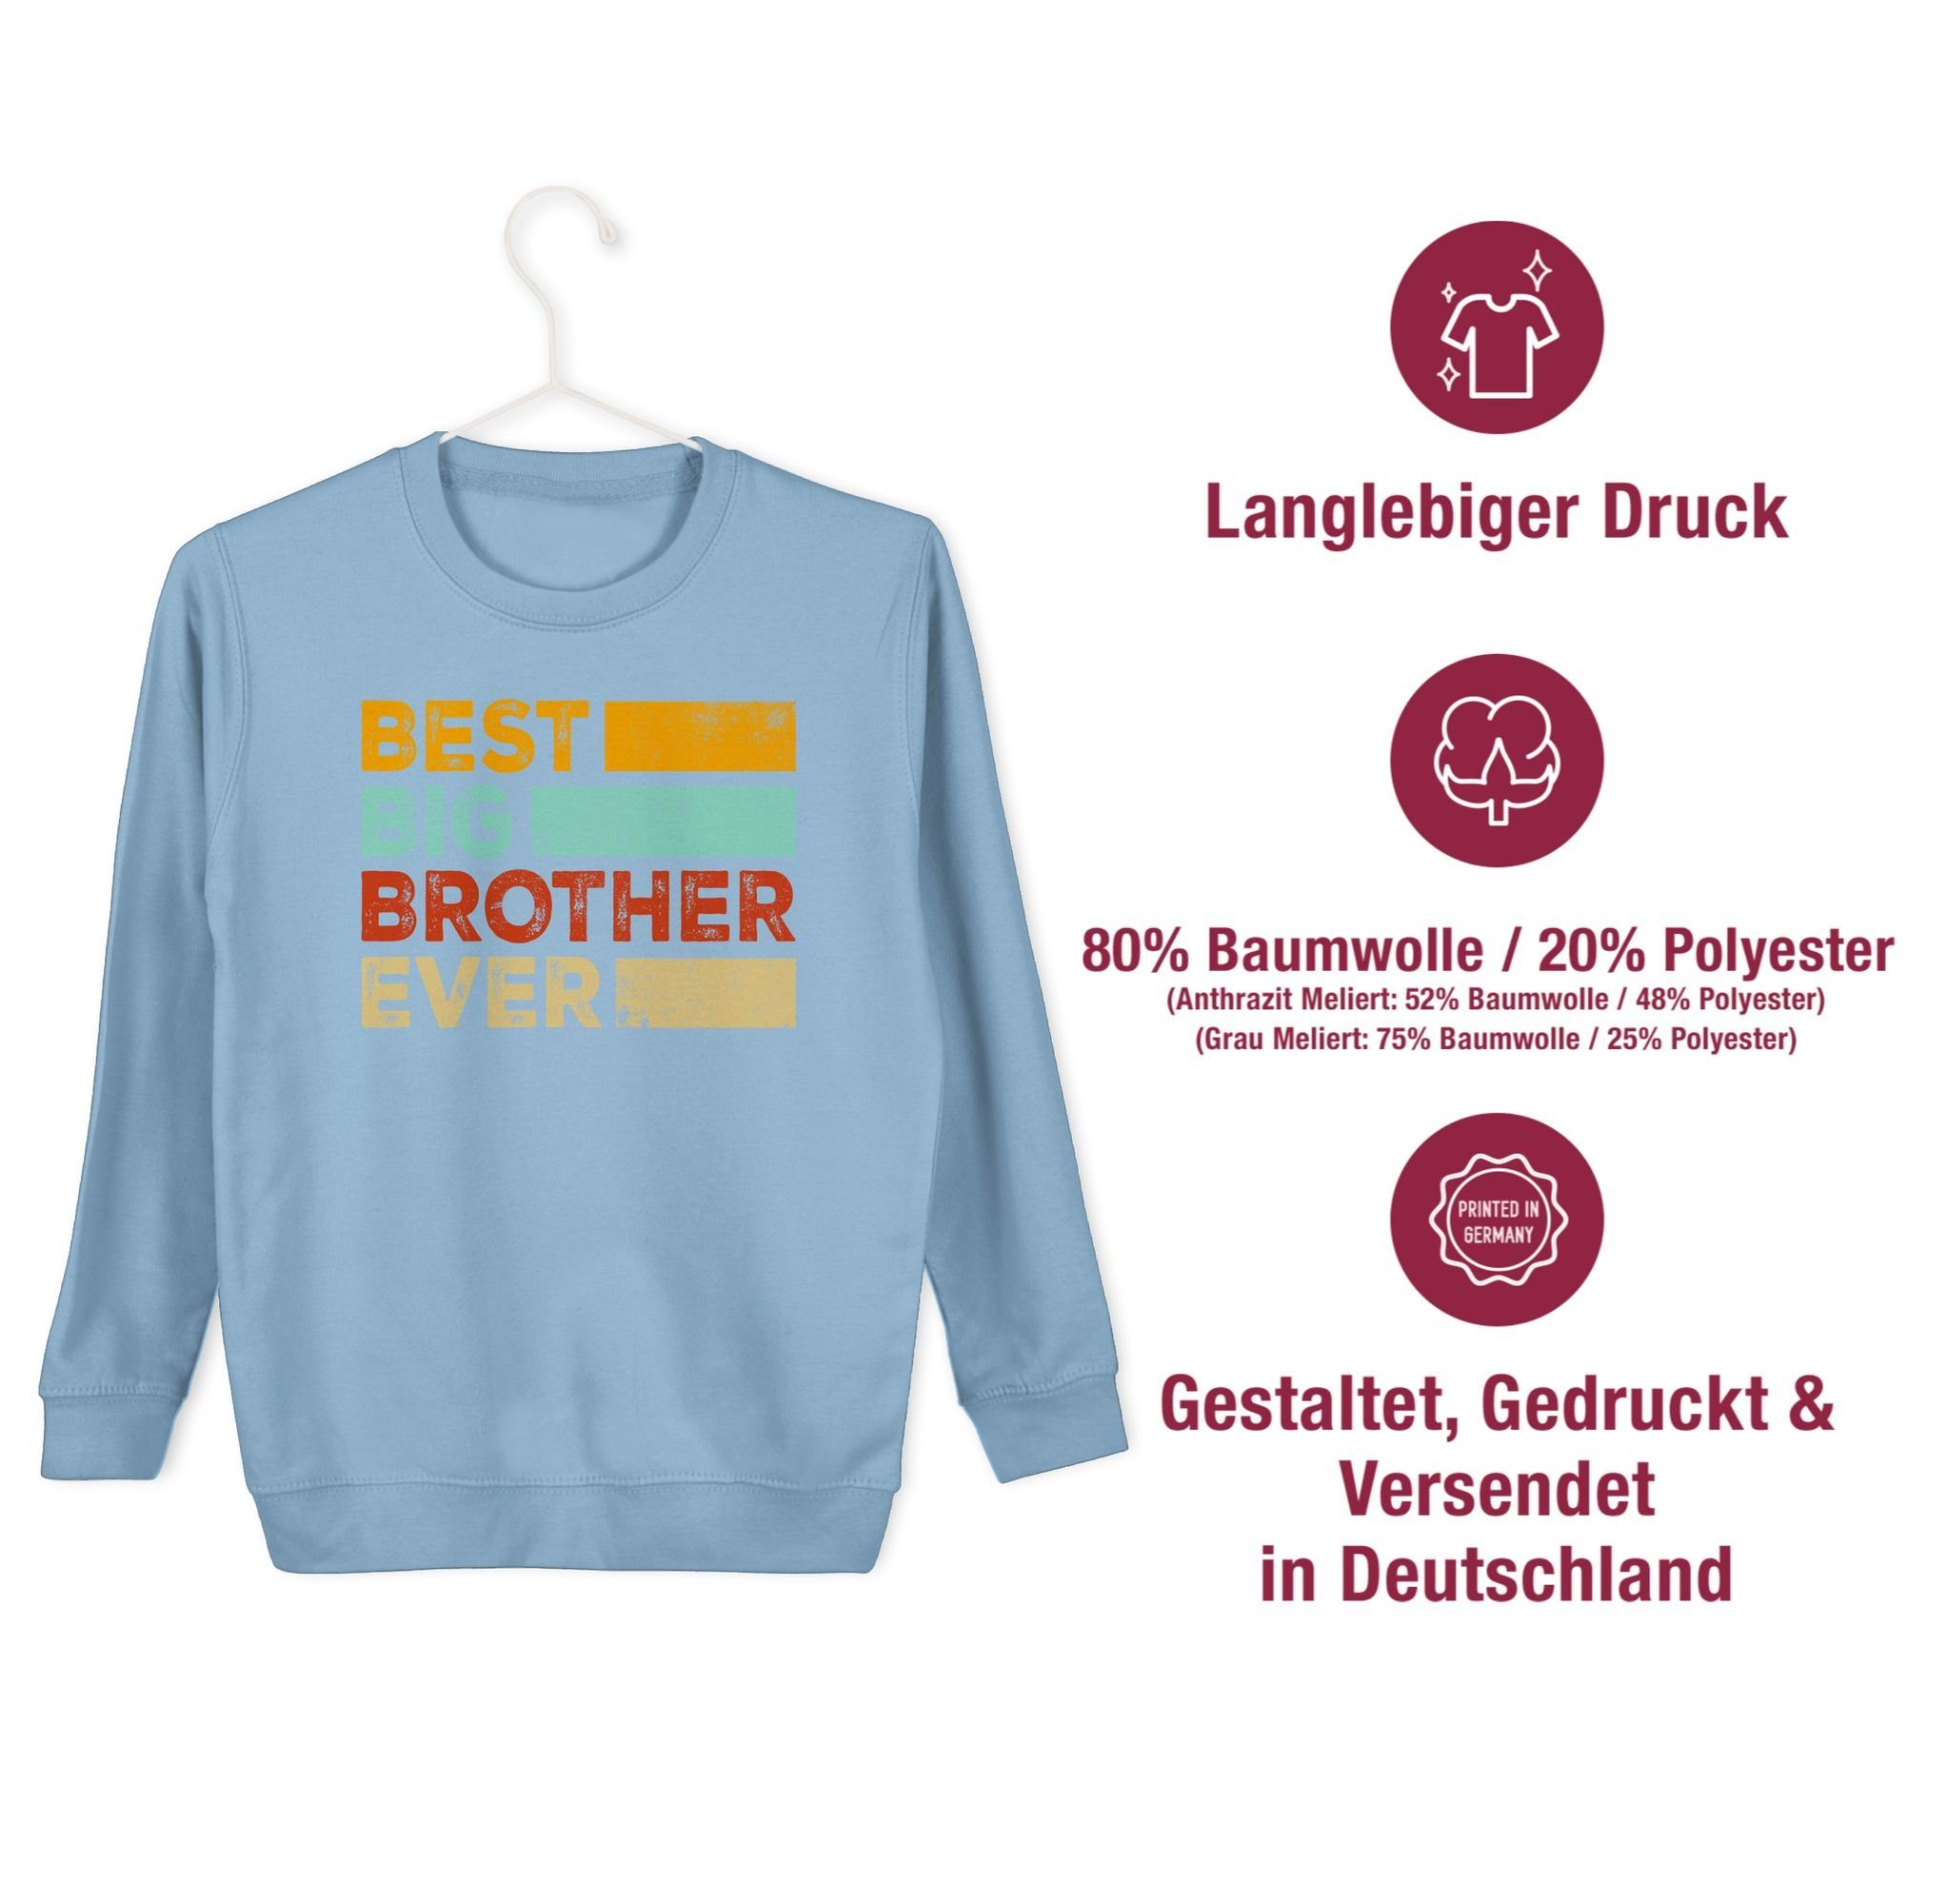 Bruder Big Geschenk Hellblau aller 3 Zeiten Ever großer Bester Großer Sweatshirt Brother Best Shirtracer Bruder